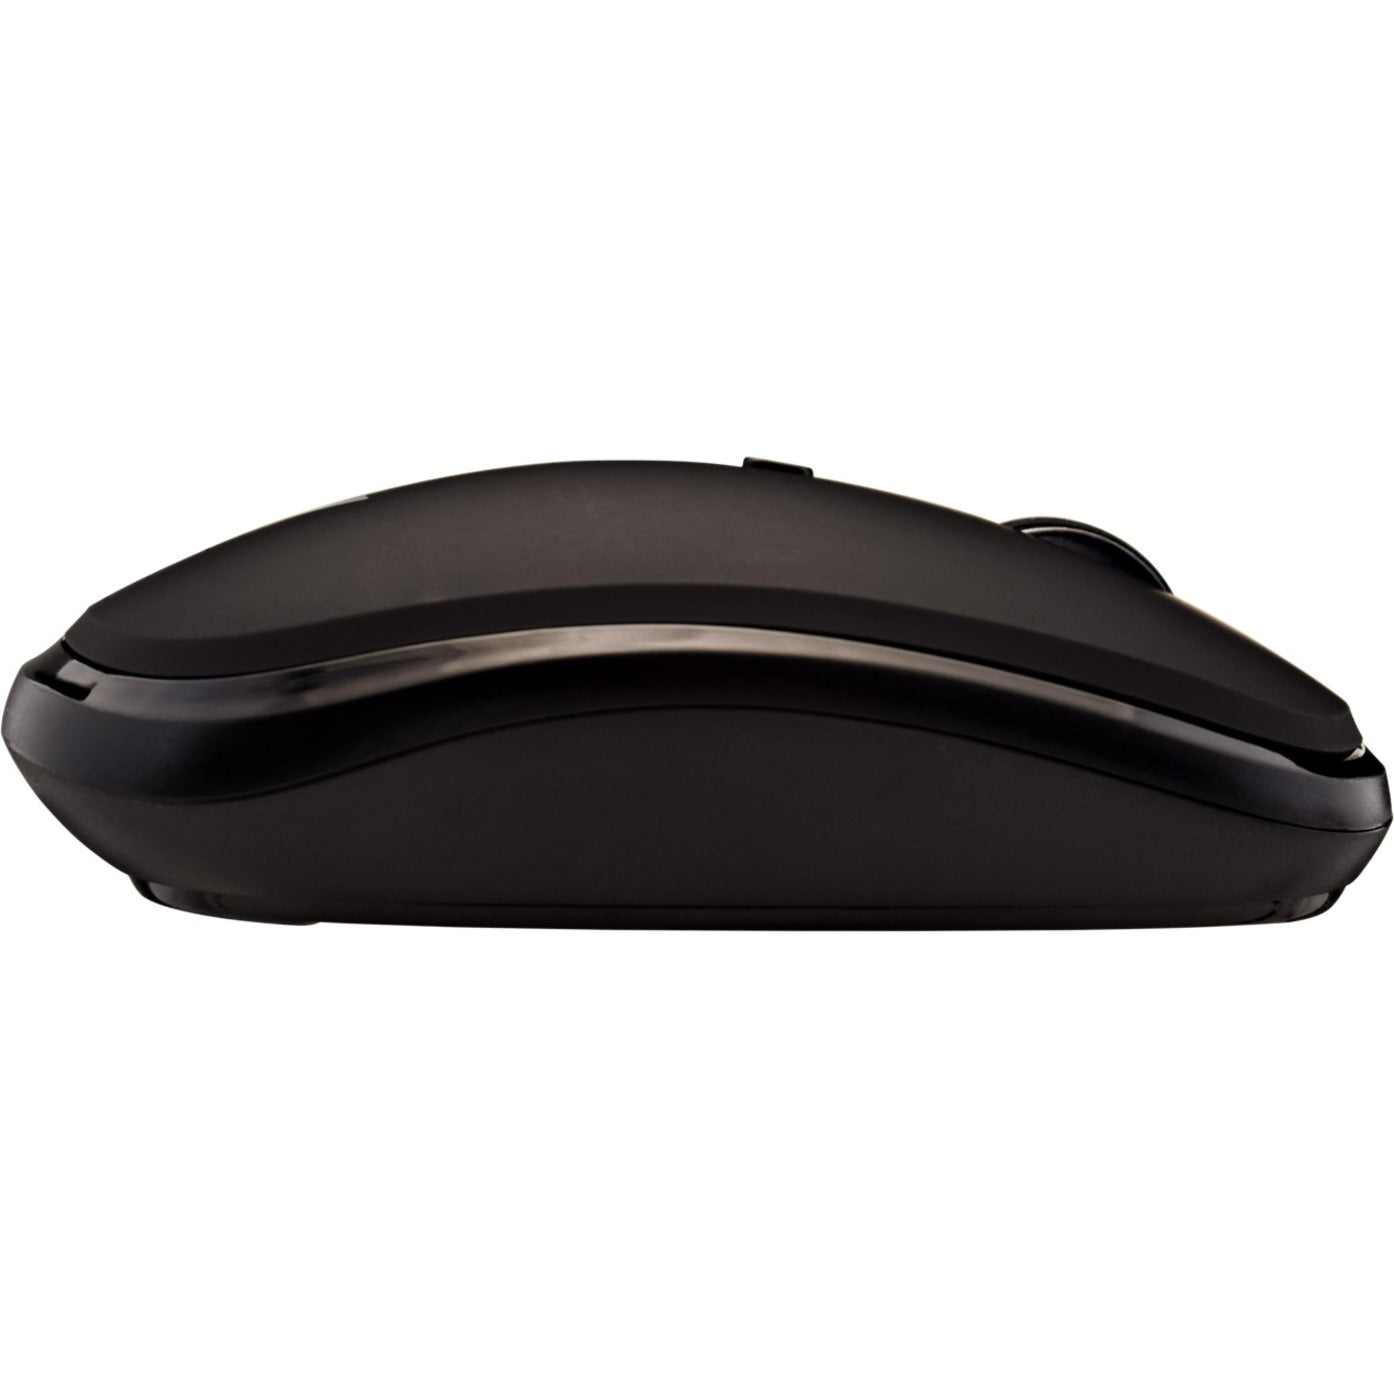 V7 MW550BT Bluetooth Silent 4-Button Mouse - Black, Ergonomic Fit, 1600 dpi, 2.4 GHz Wireless